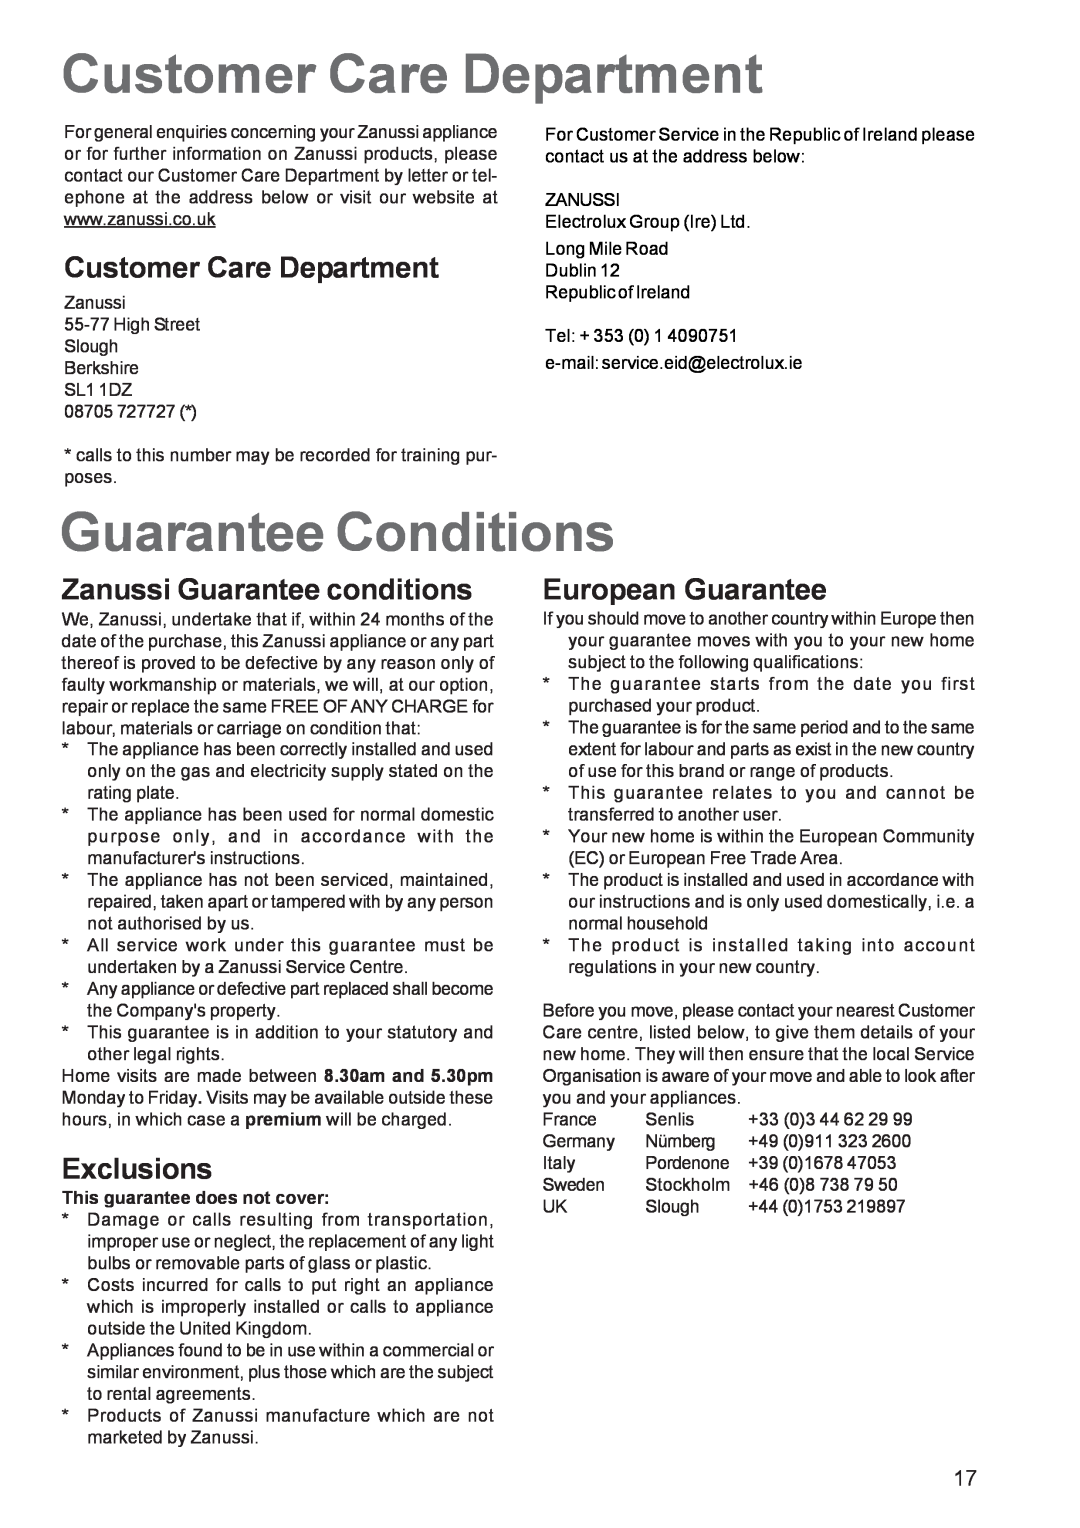 Zanussi ZBF 360 manual Customer Care Department, Guarantee Conditions, Zanussi Guarantee conditions, Exclusions 